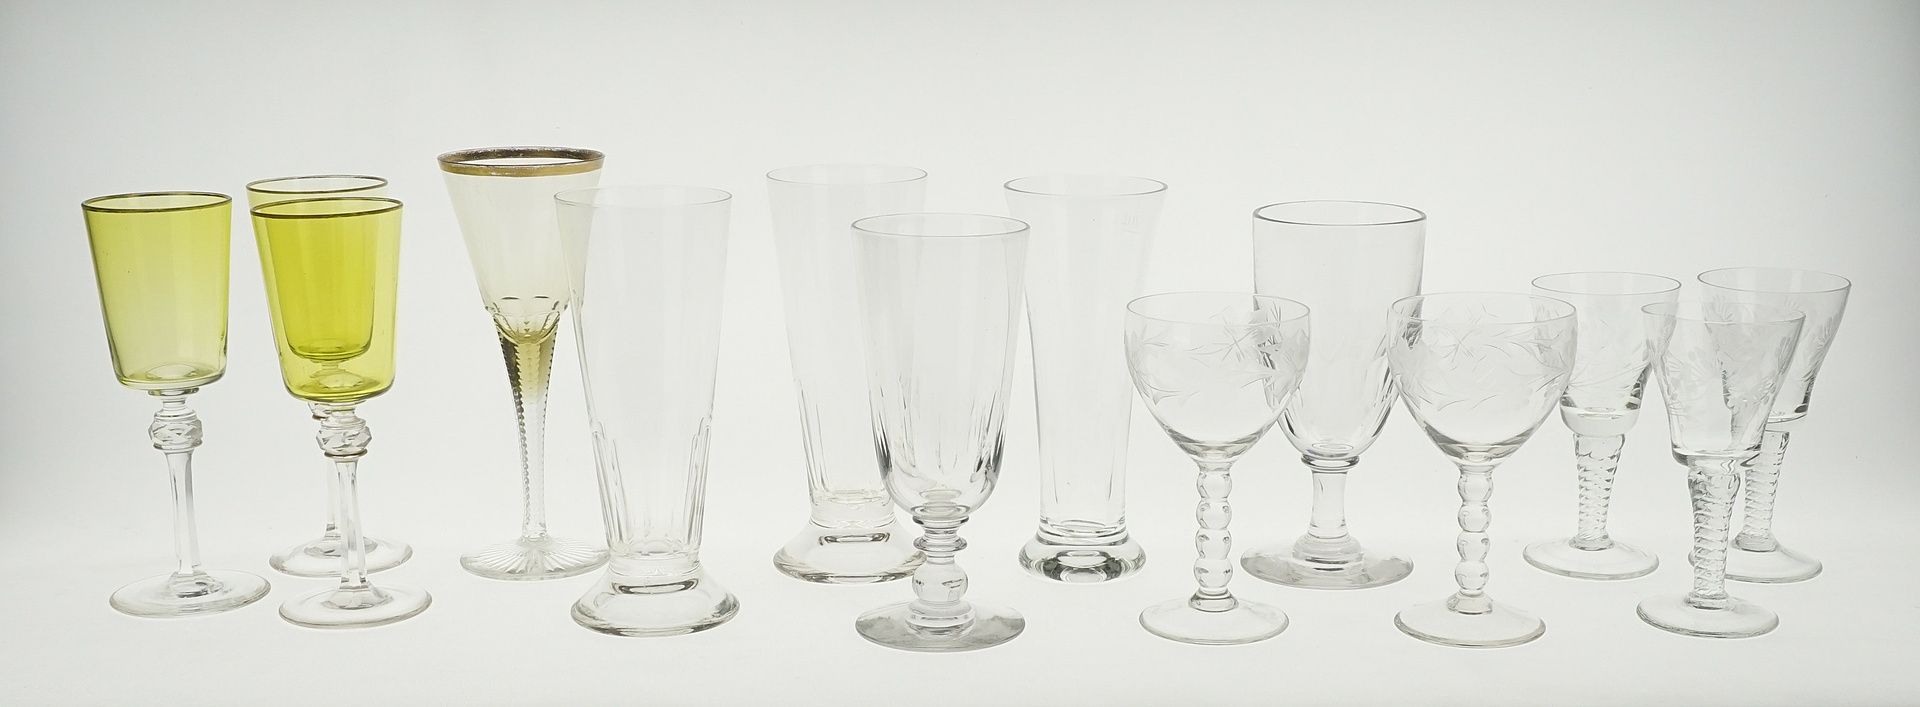 29 glasses, around 1900 - Image 3 of 3